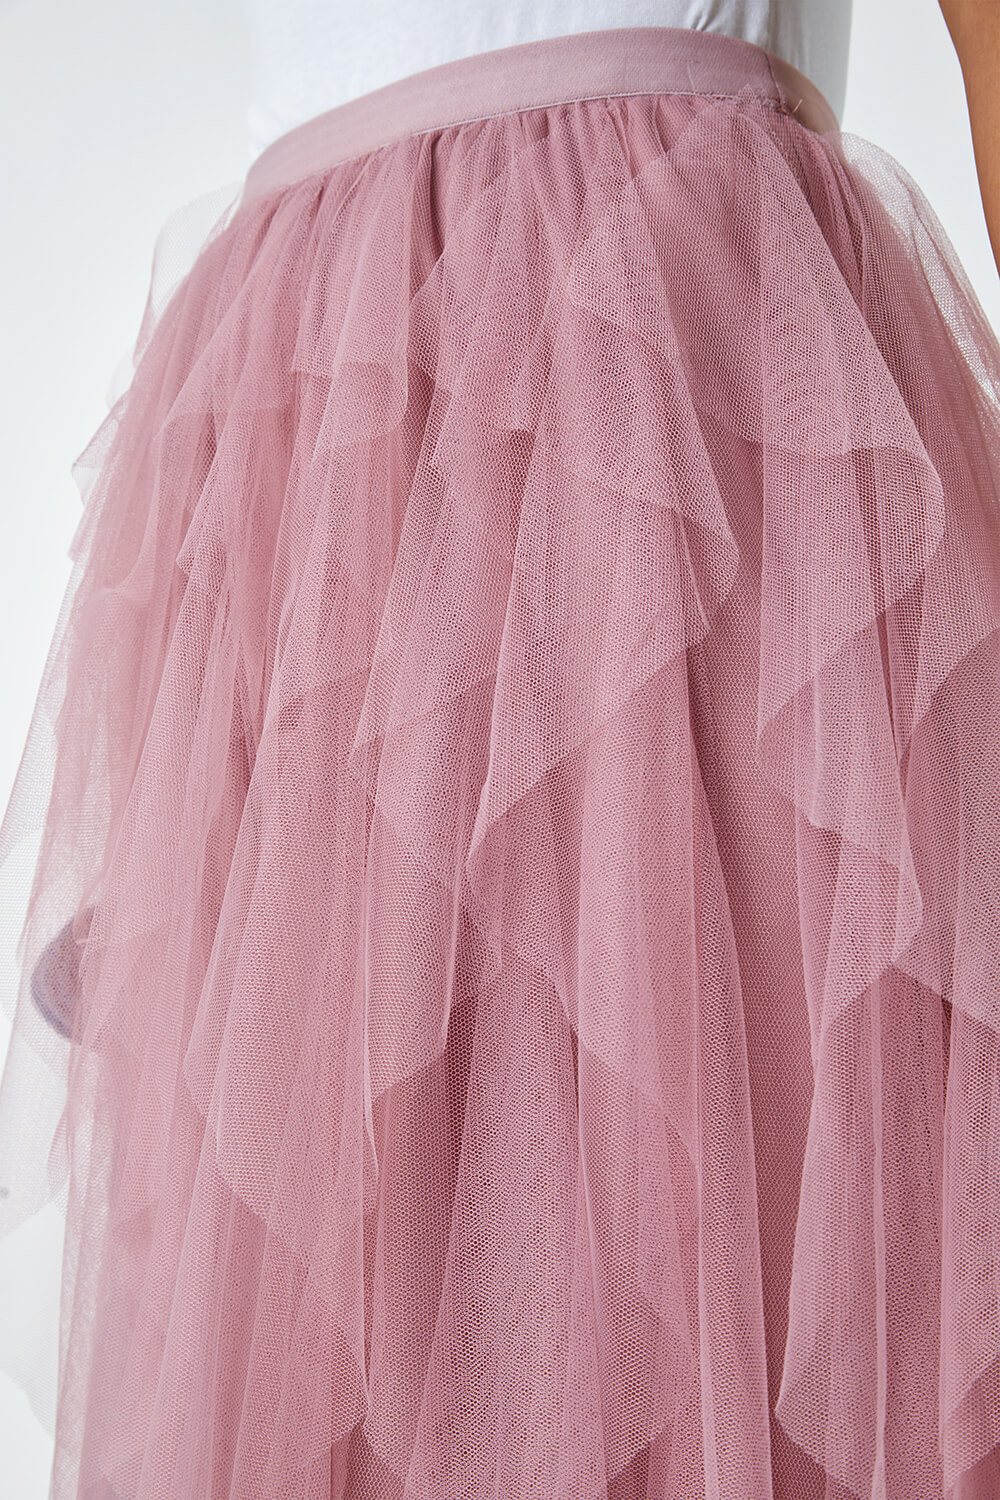 PINK Elasticated Mesh Layered Skirt, Image 4 of 6